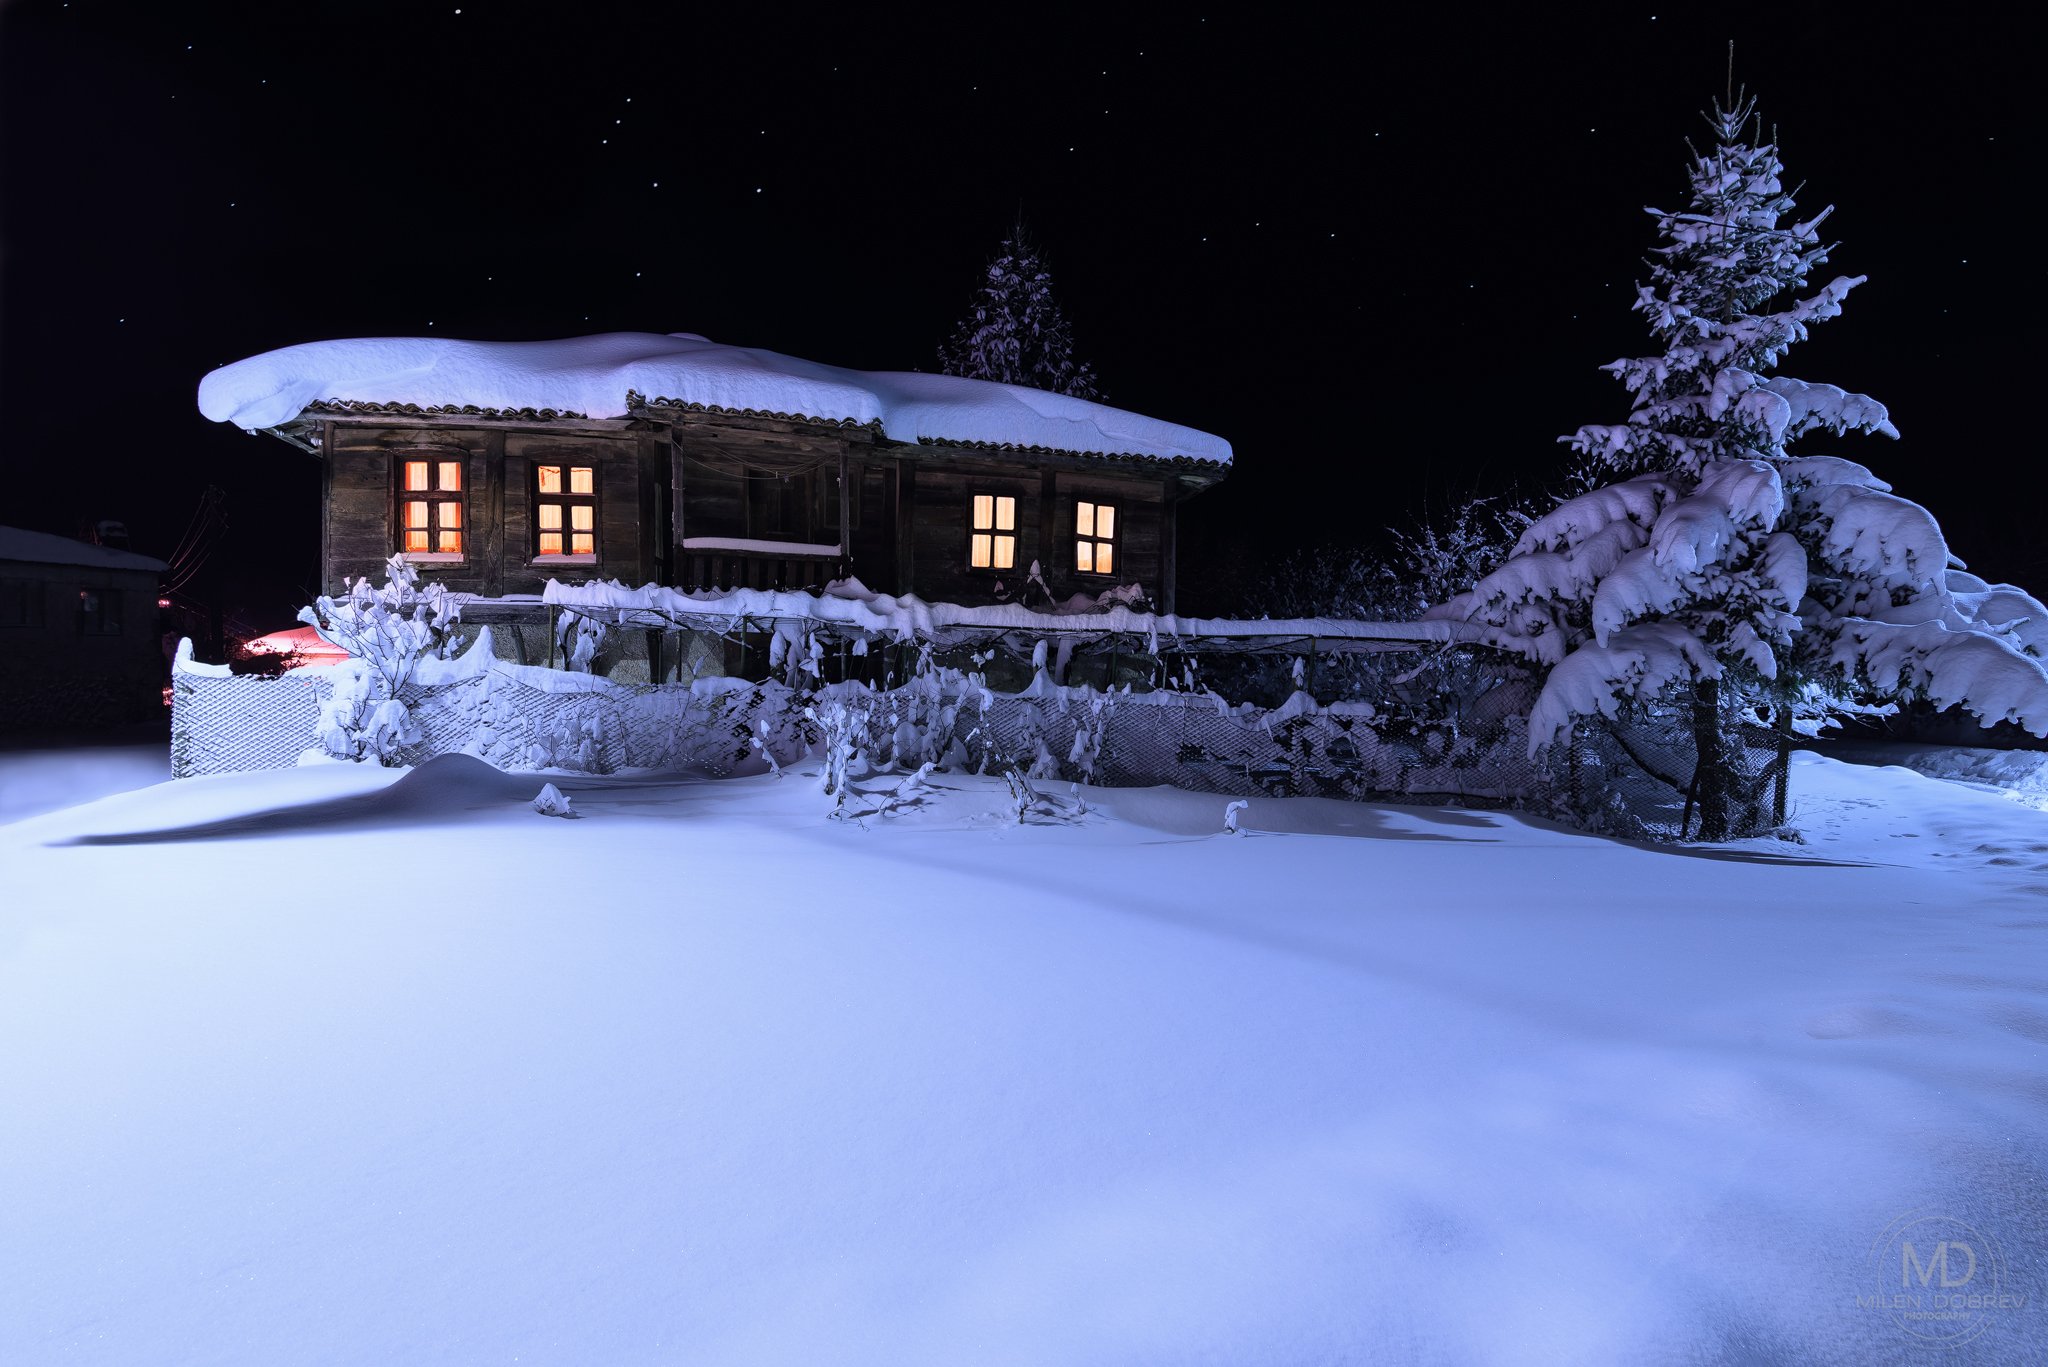 Bulgaria, Strandzha mountain, Snow, night, winter, home, village, Милен Добрев